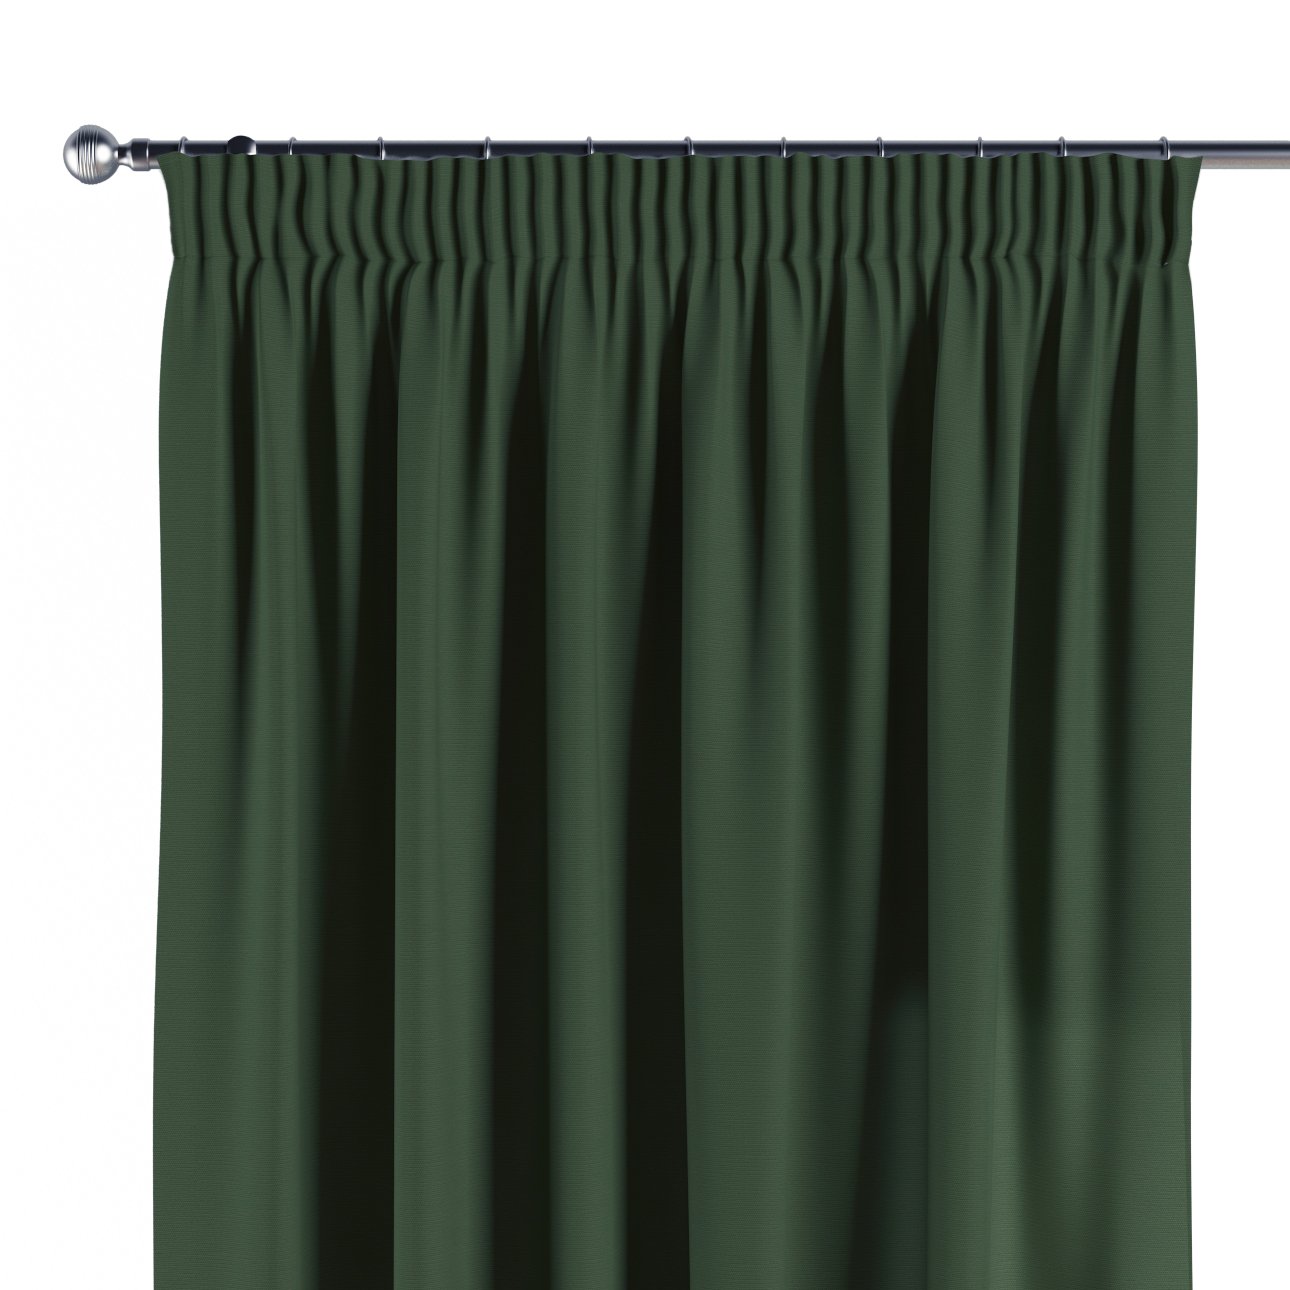 Vorhang mit Kräuselband, waldgrün, 702-06 | Fertiggardinen